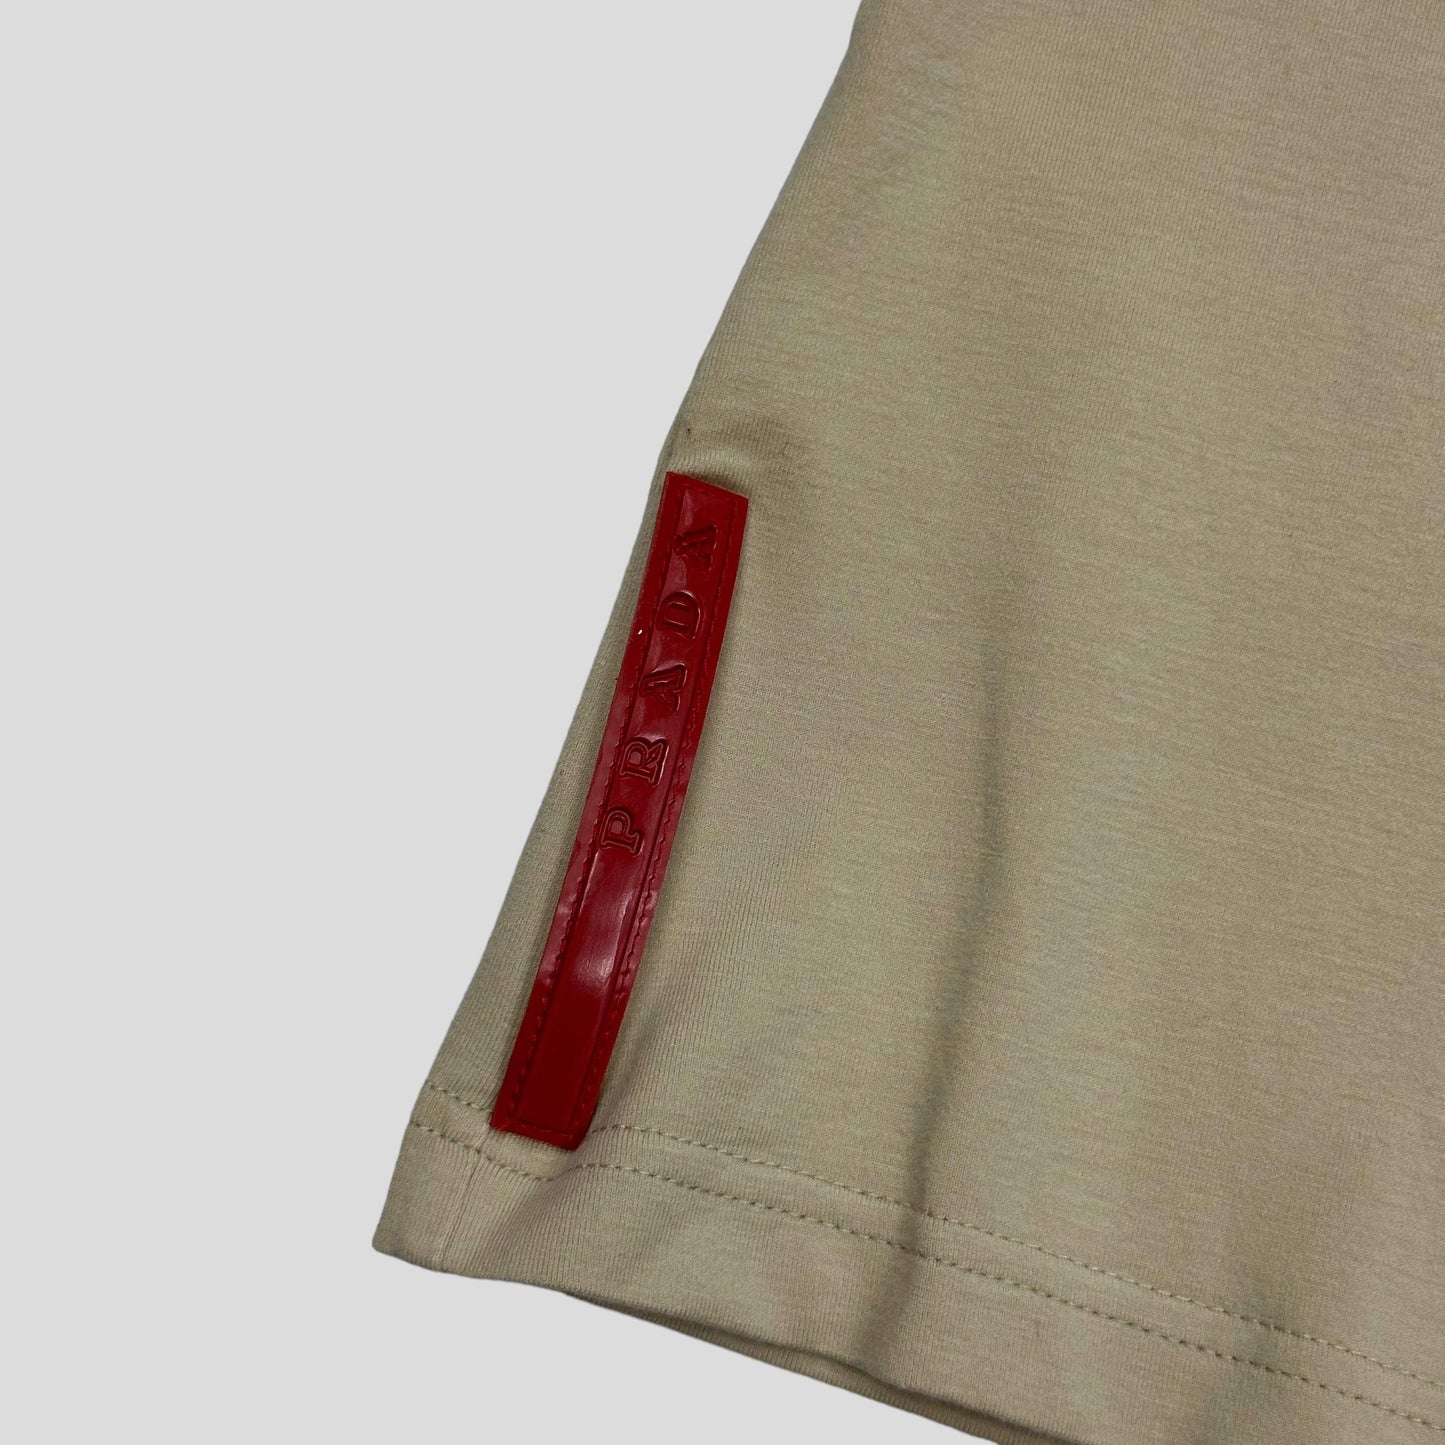 Prada Sport 00’s Collared Zip-up Stash Pocket Top - UK6-8 - Known Source